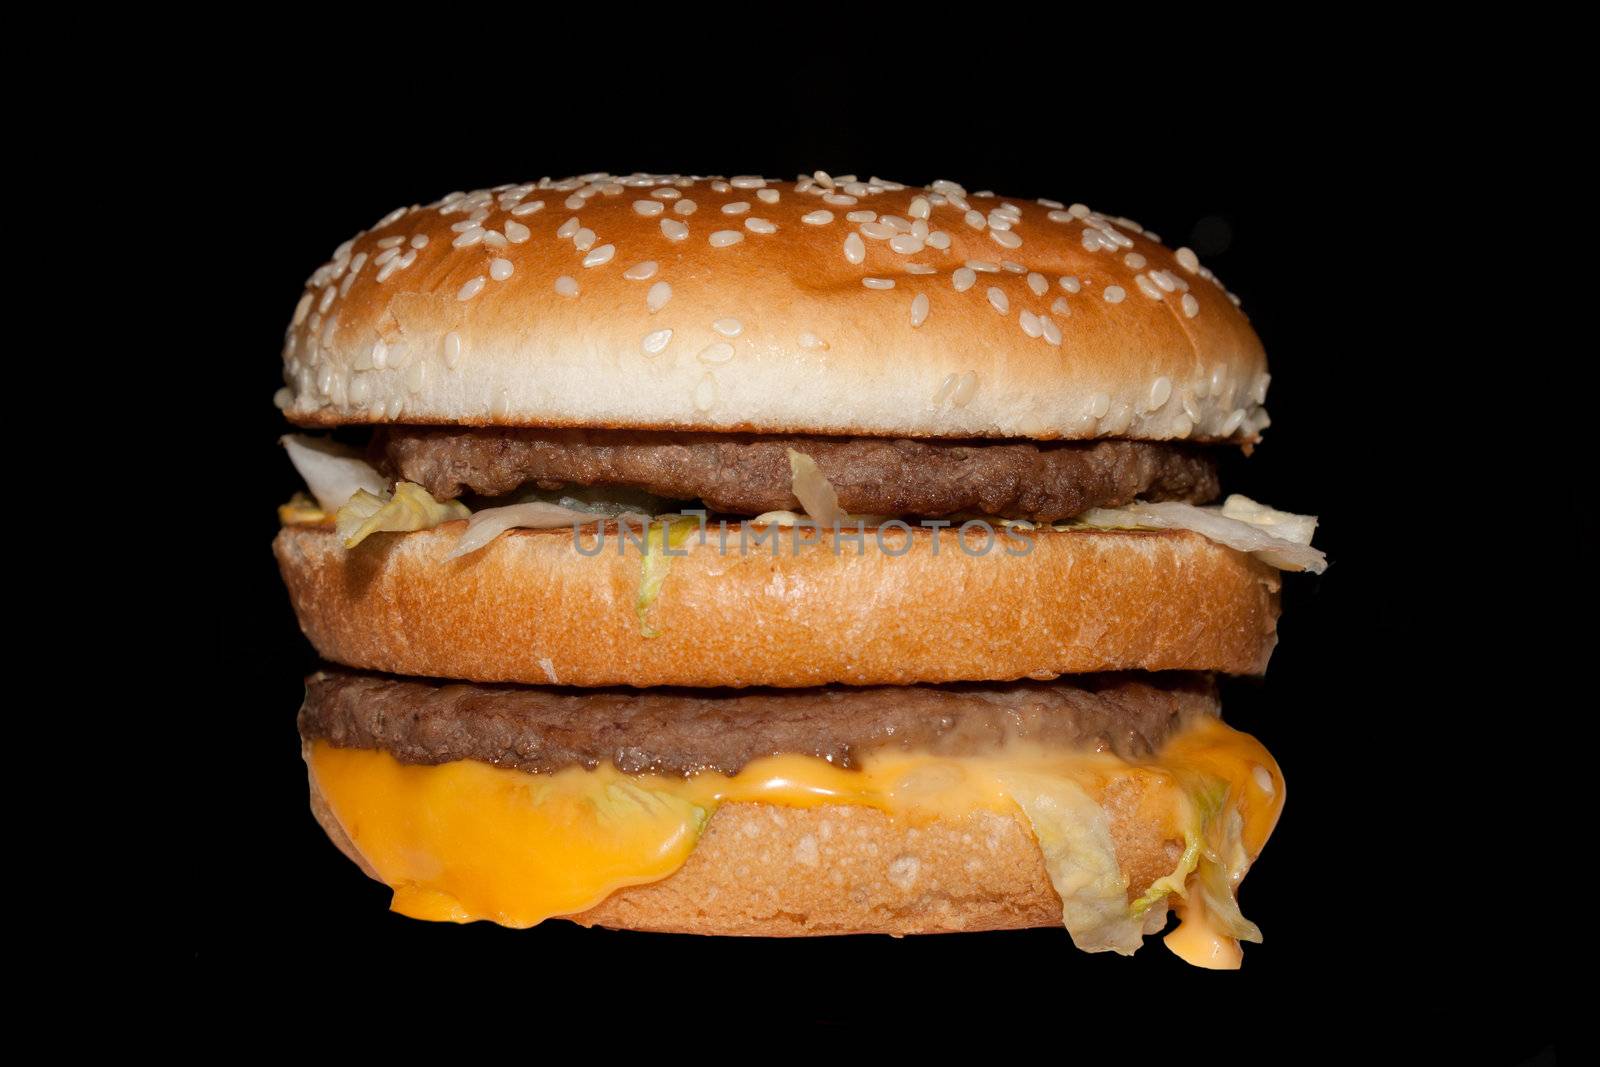 Digital photo of the real Big Mac